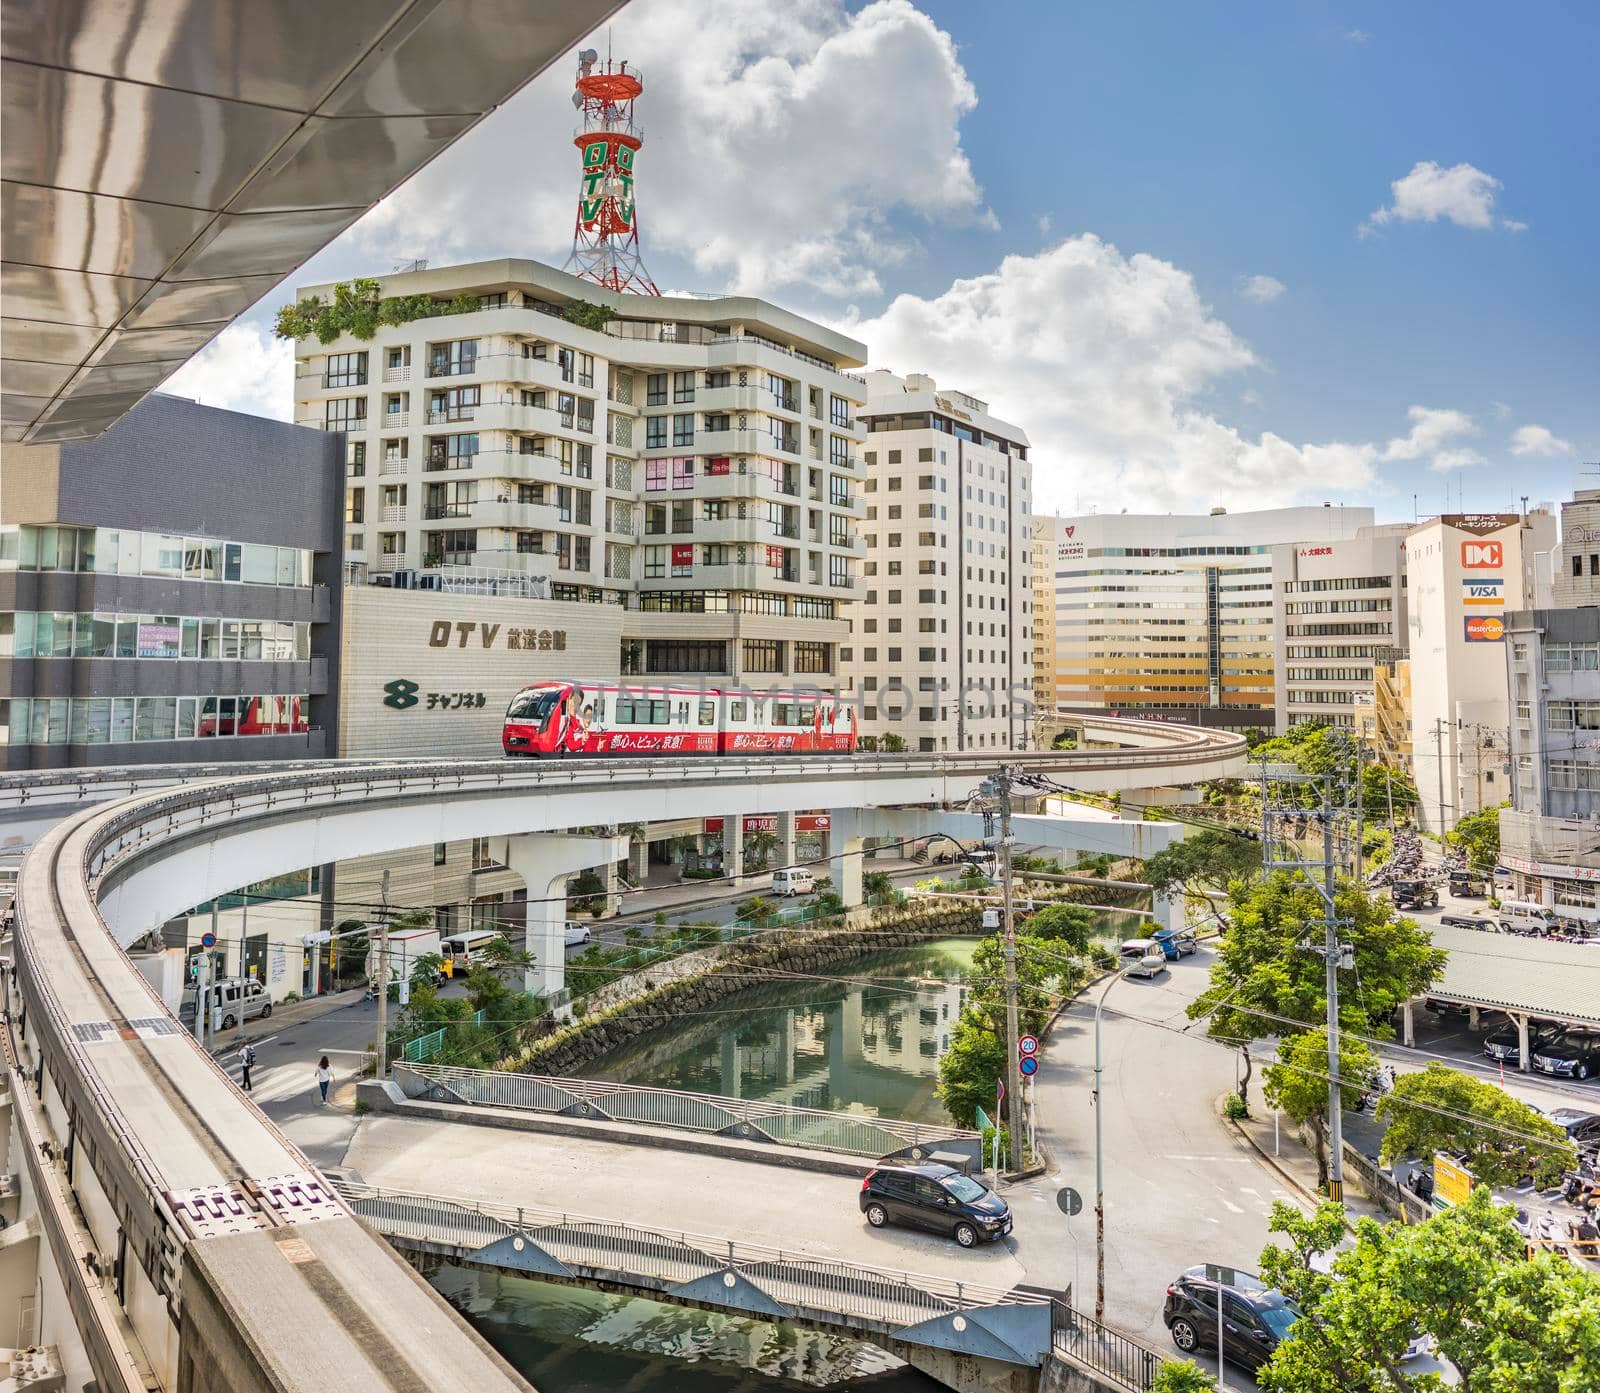 Naha city monorail in Okinawa island by kuremo